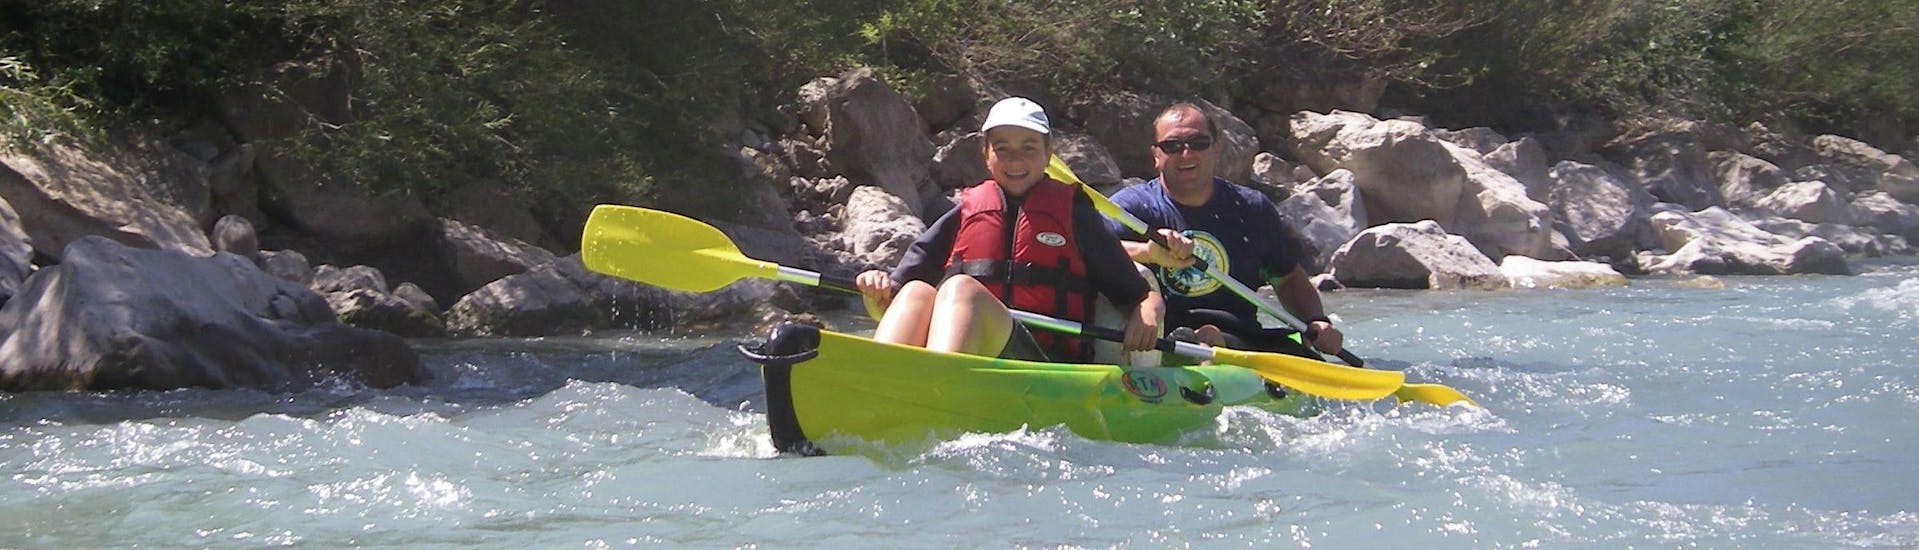 20km Adventure Kayak & Canoe Tour on the Var River.